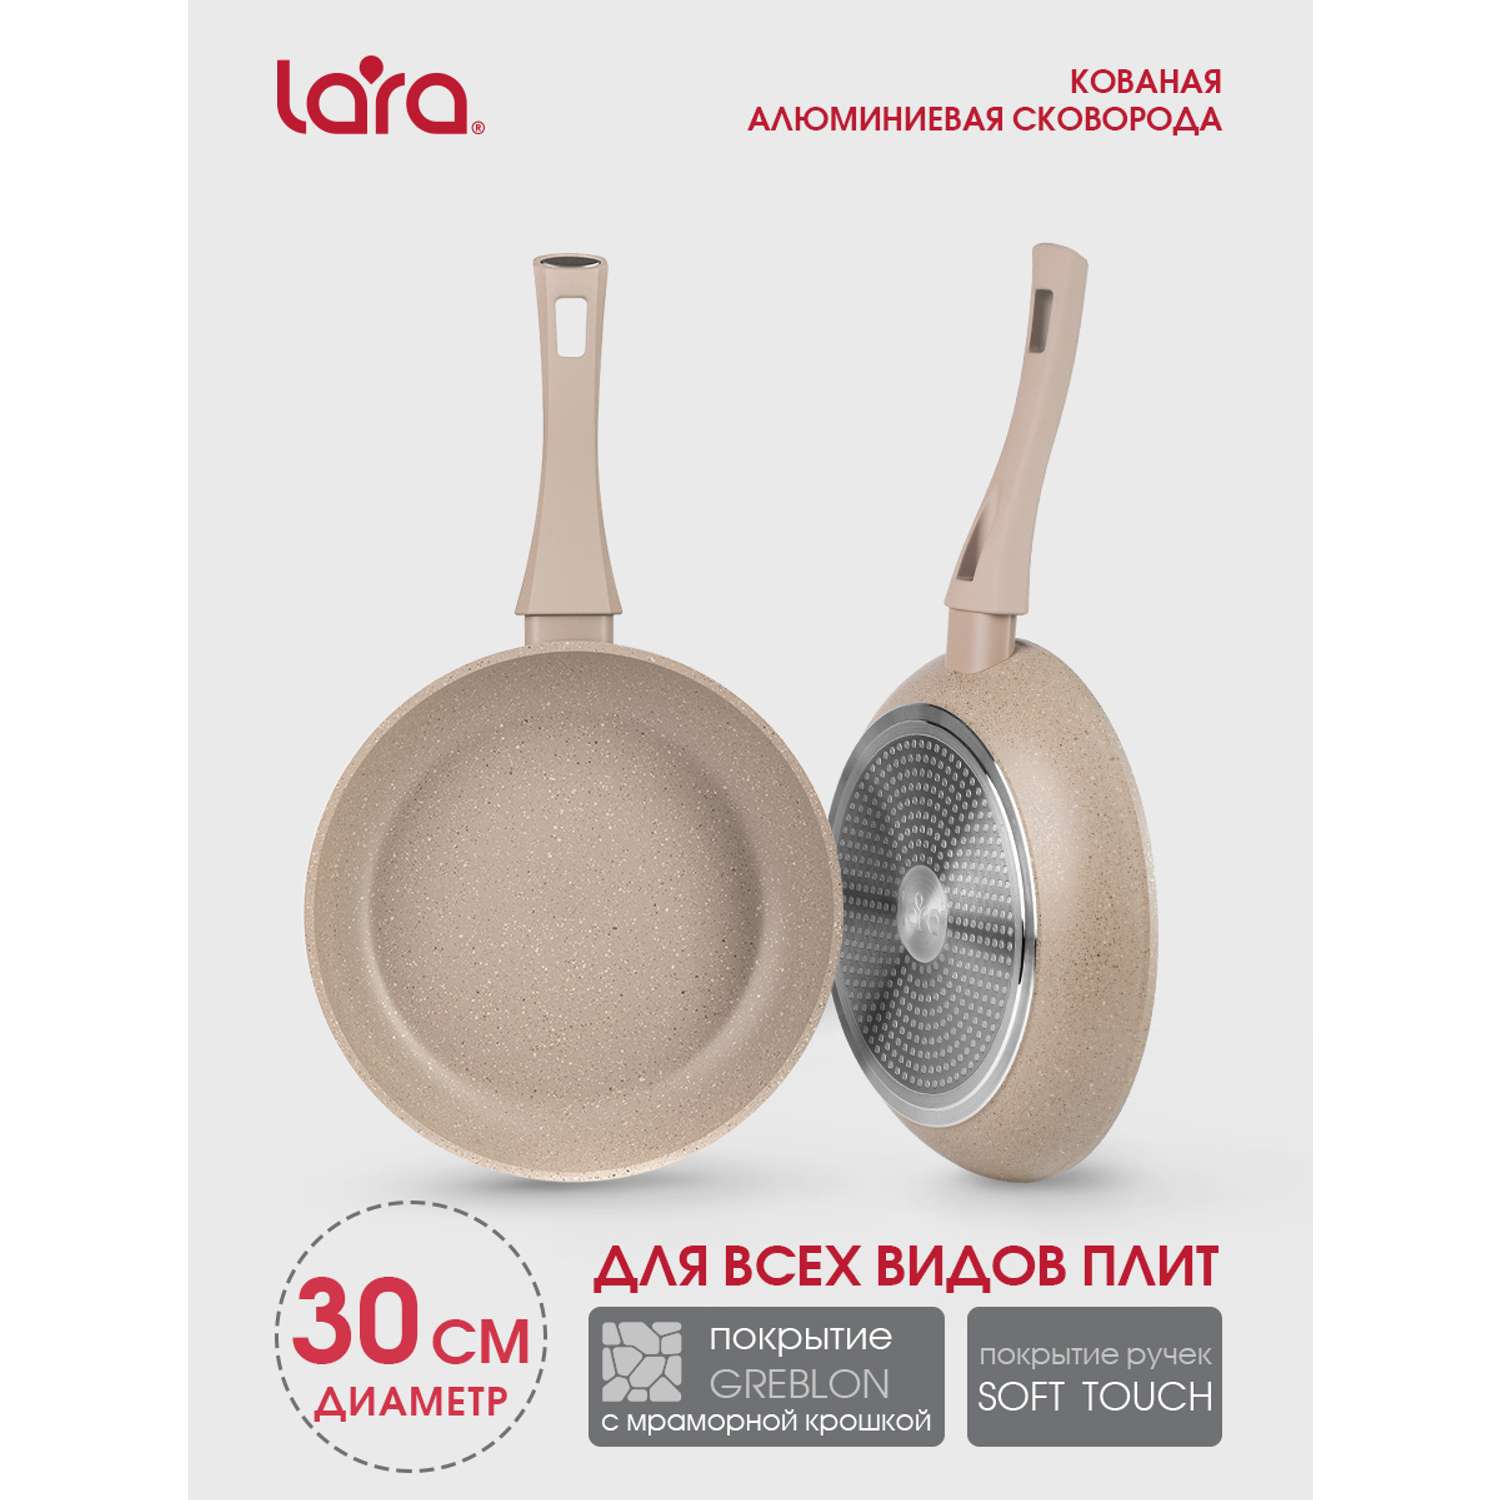 Сковорода LARA Carmeliya 30 бежевая кованный алюминий покрытие greblon диаметр 30 см - фото 1